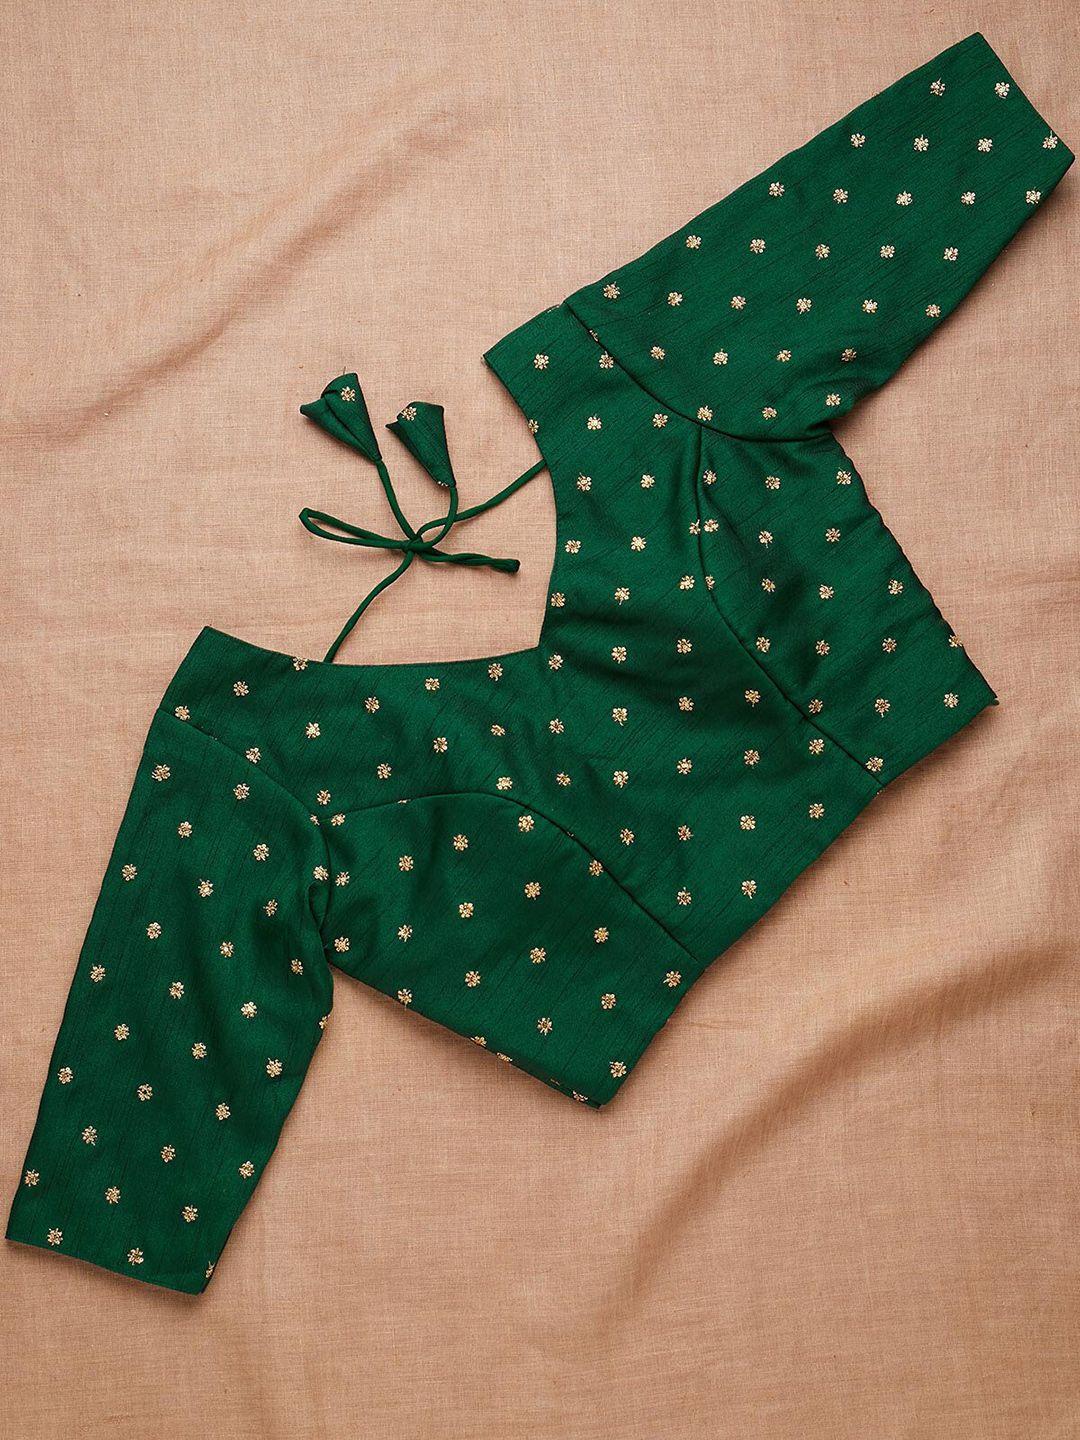 koskii green embroidered saree blouse